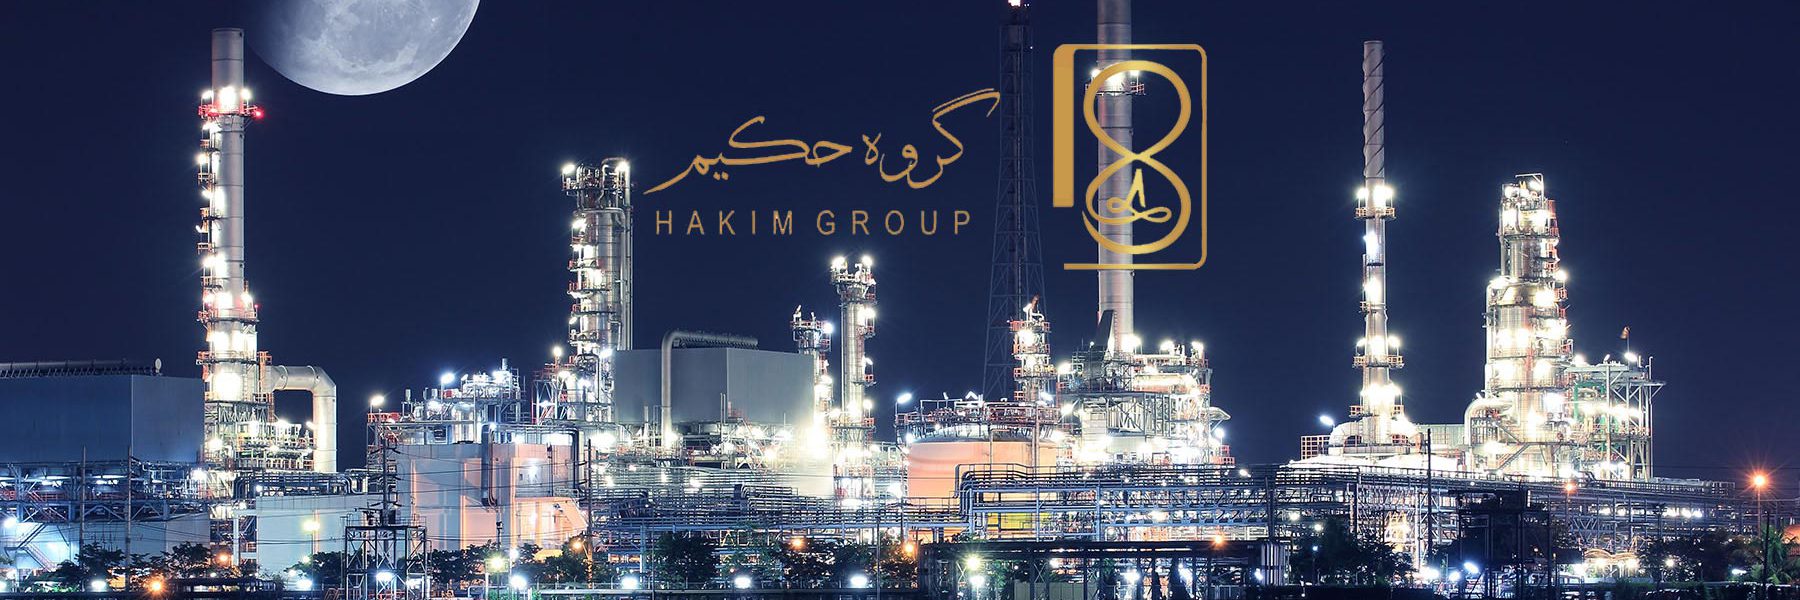 Hakim-Group